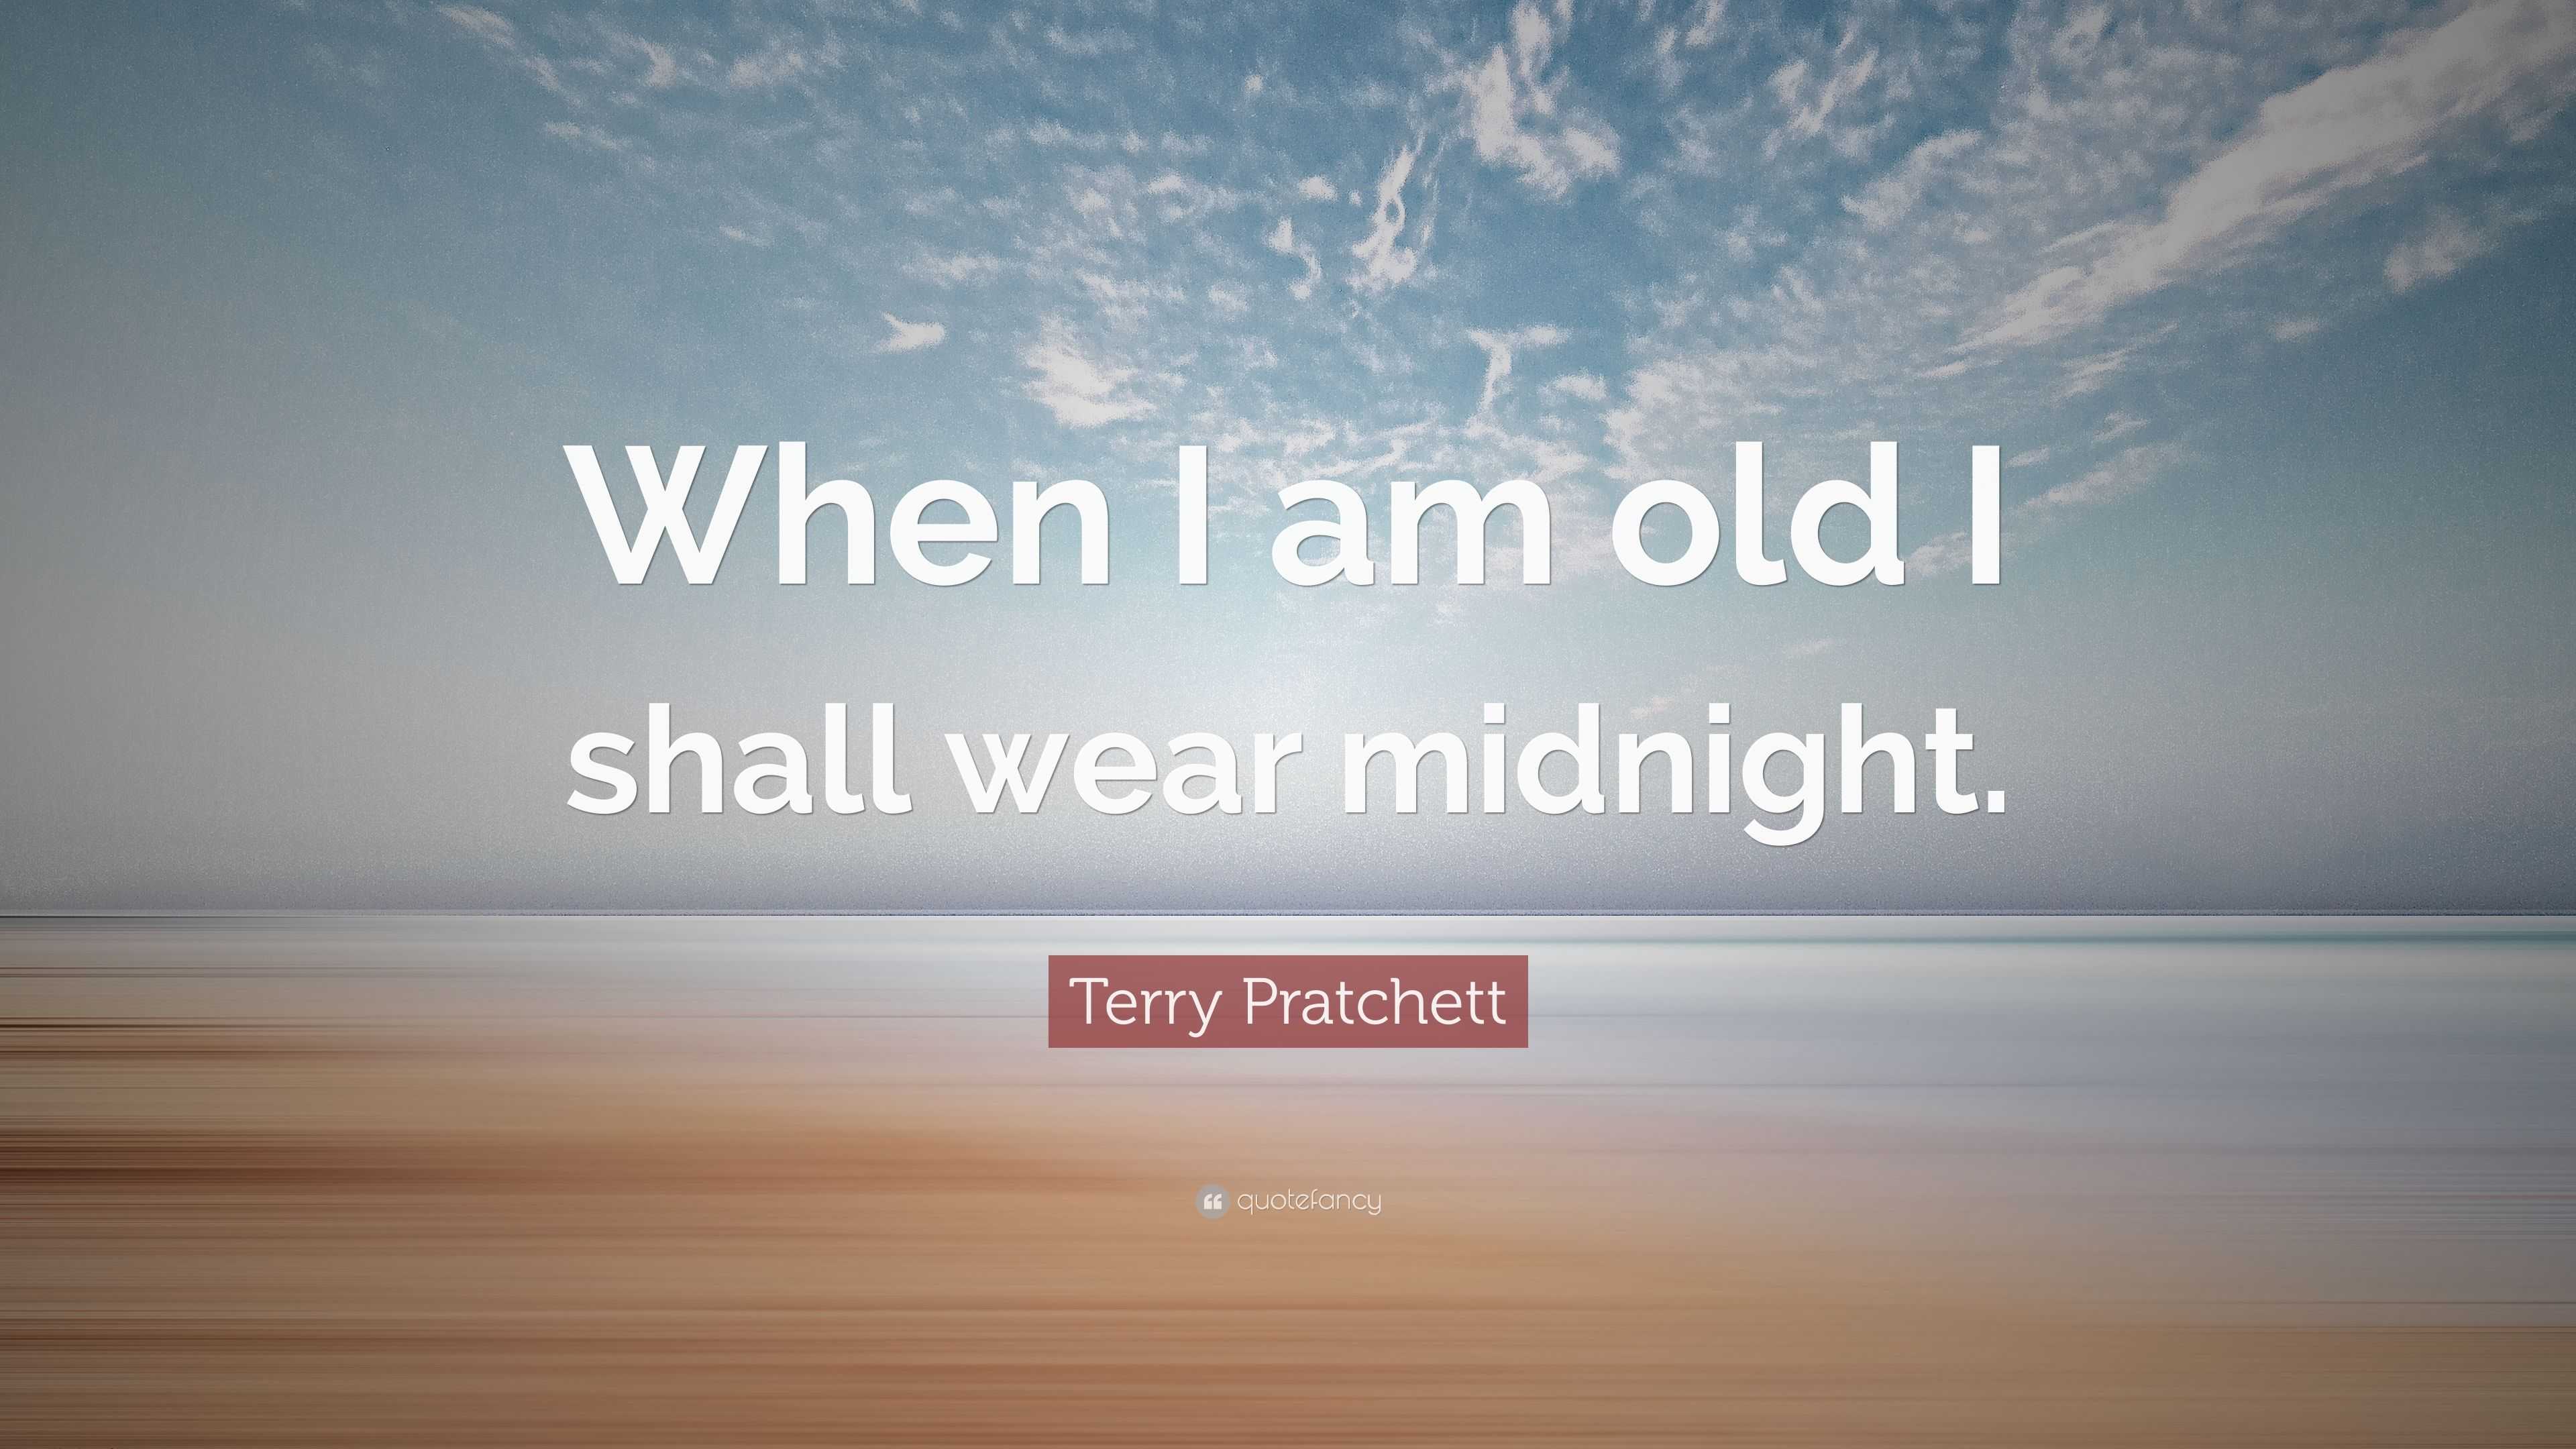 terry pratchett i shall wear midnight